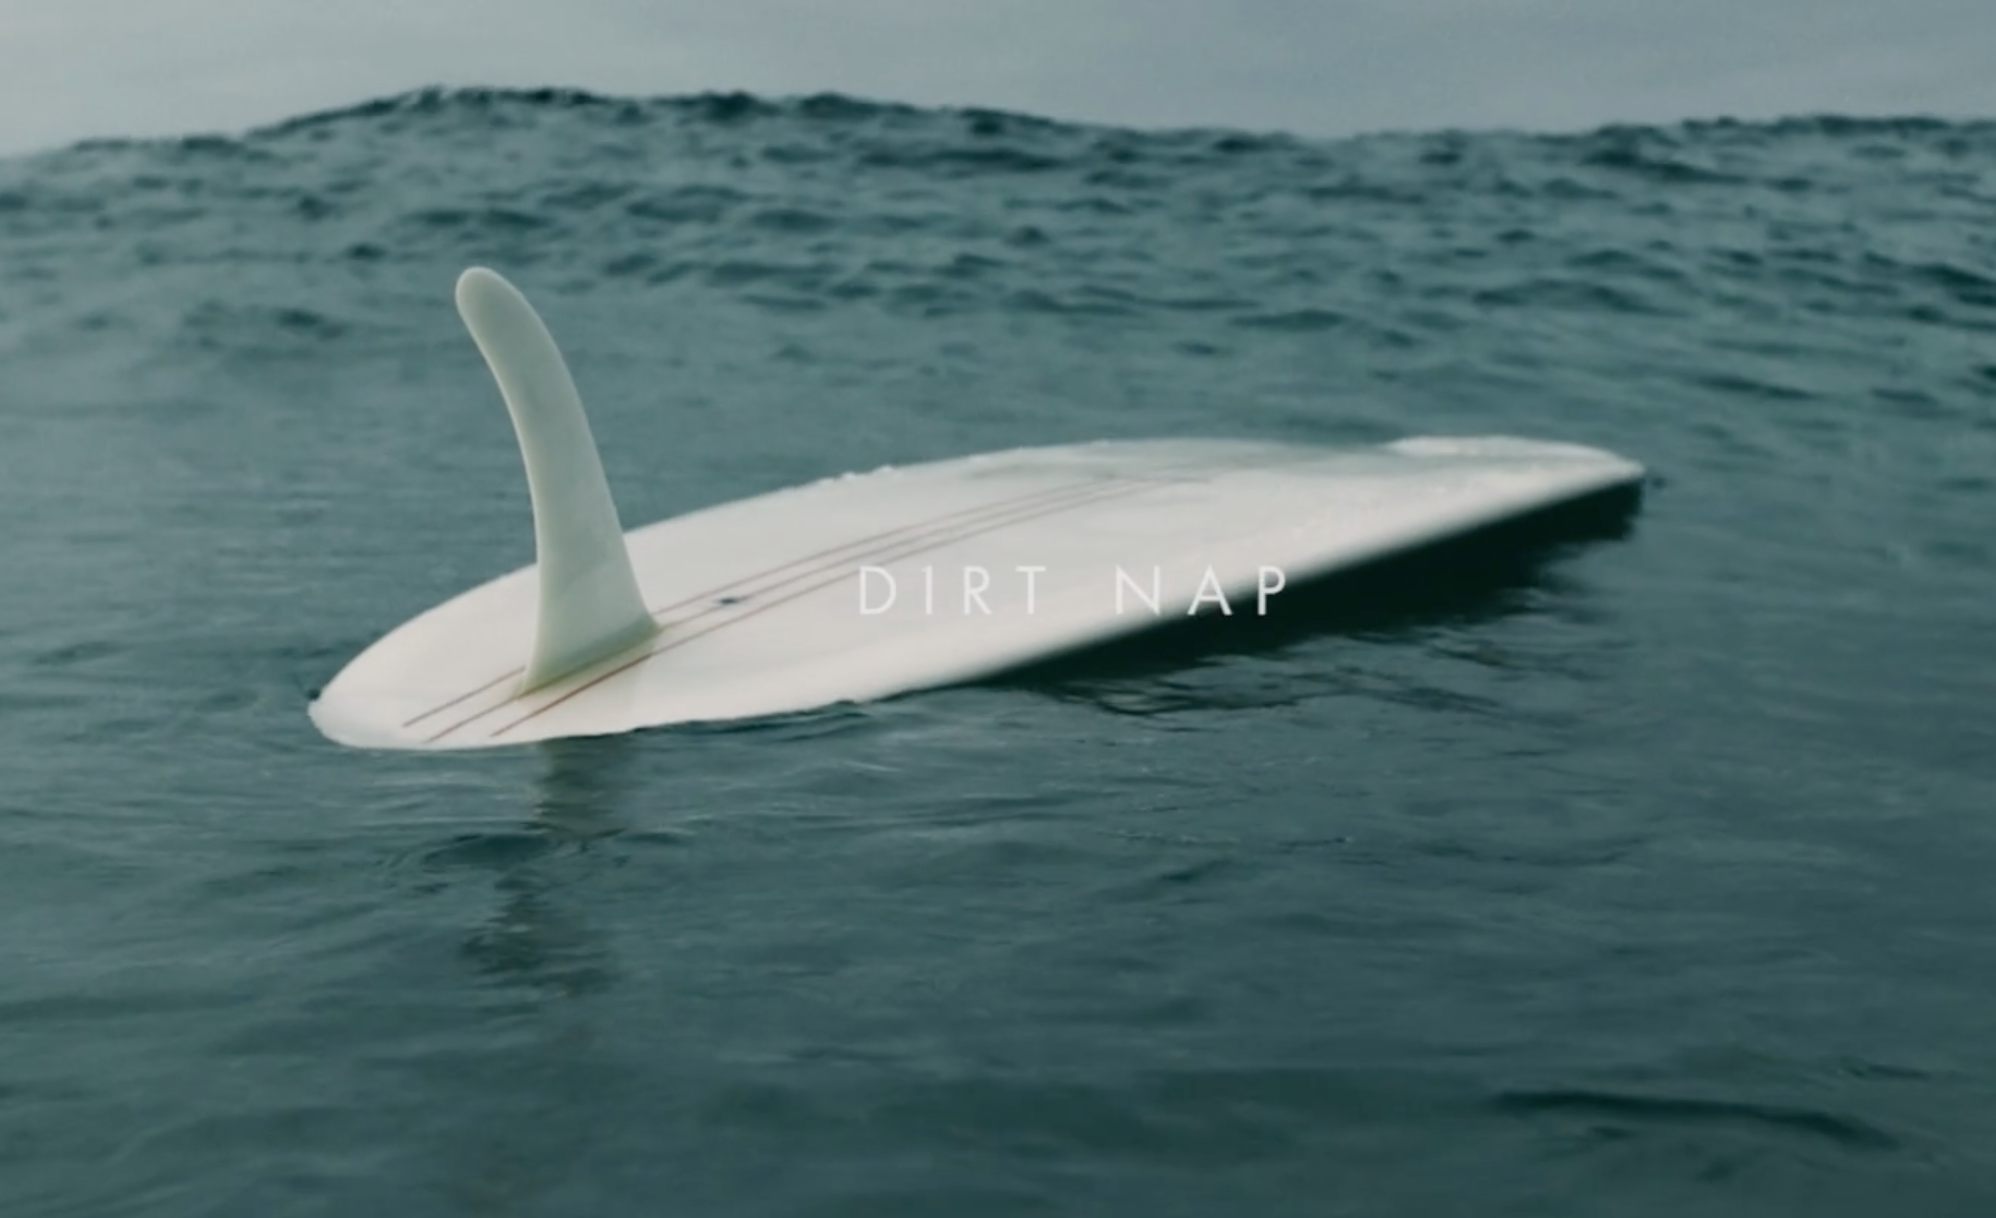 McTAVISH SURF BOARDS - THE DIRT NAP